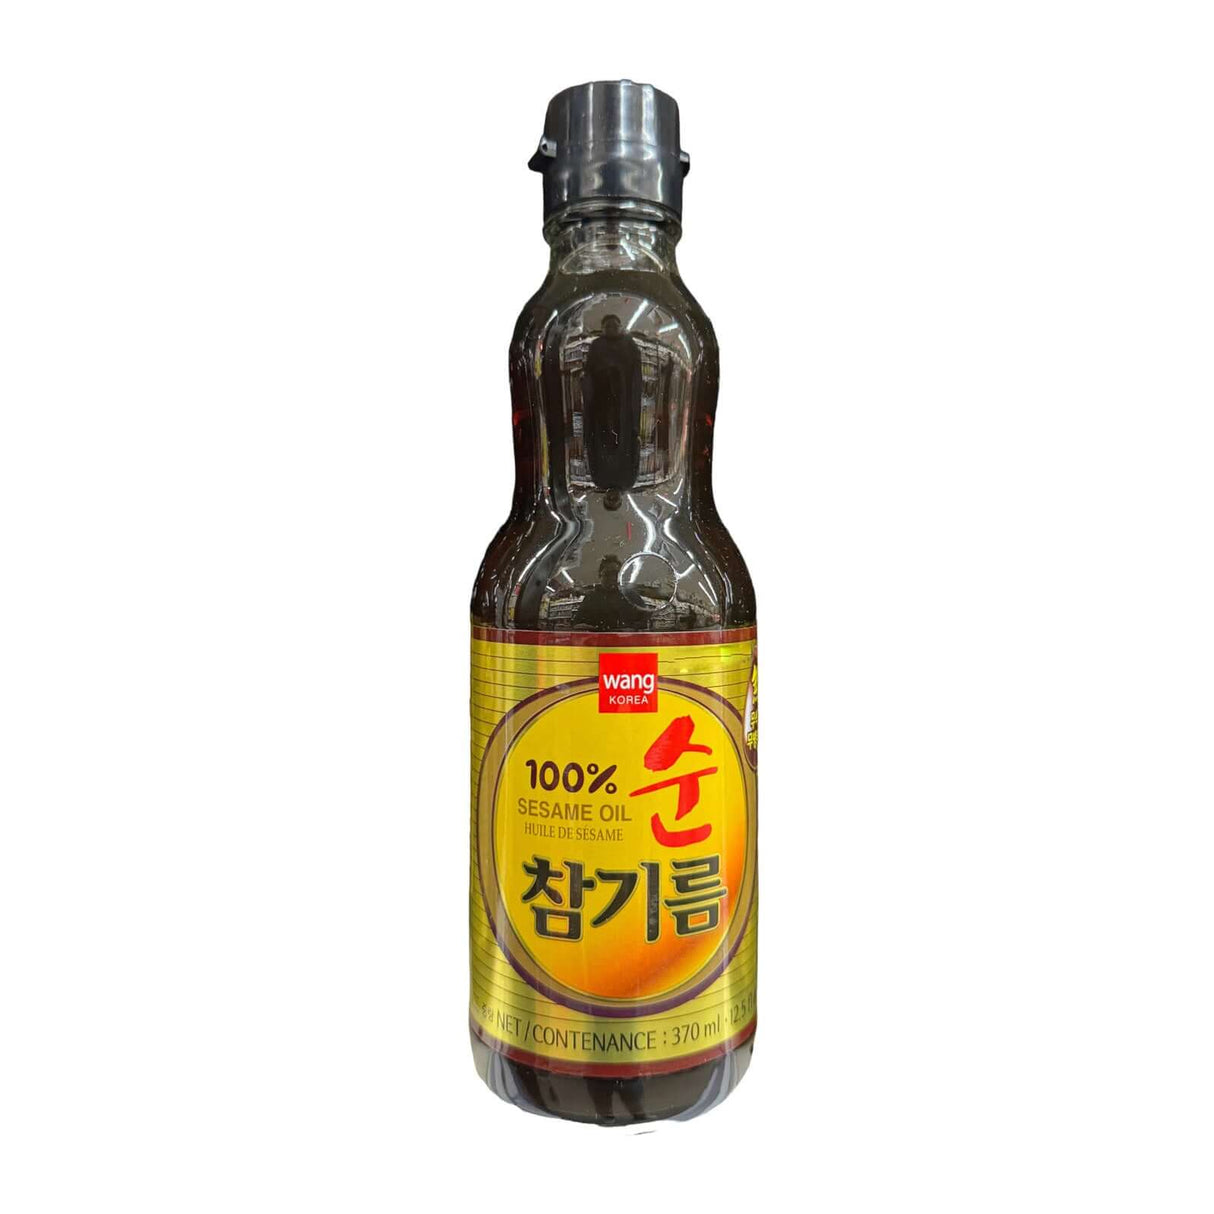 Wang Korea 100% Sesame Oil